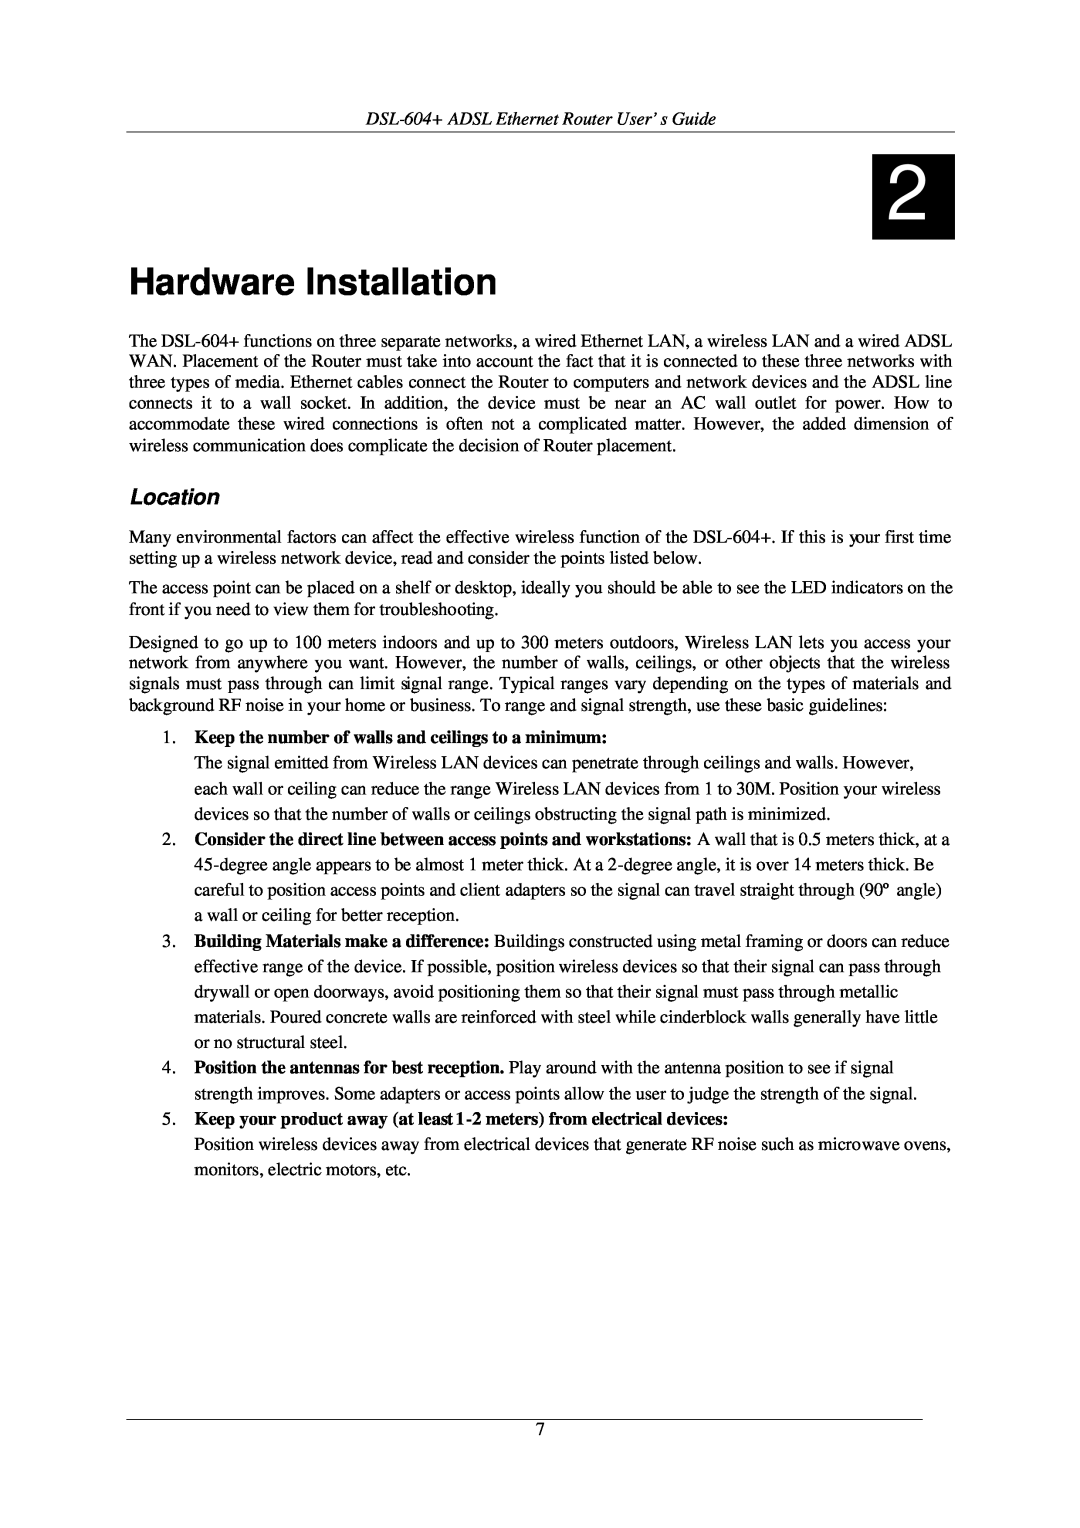 D-Link manual Hardware Installation, Location, DSL-604+ ADSL Ethernet Router User’s Guide 